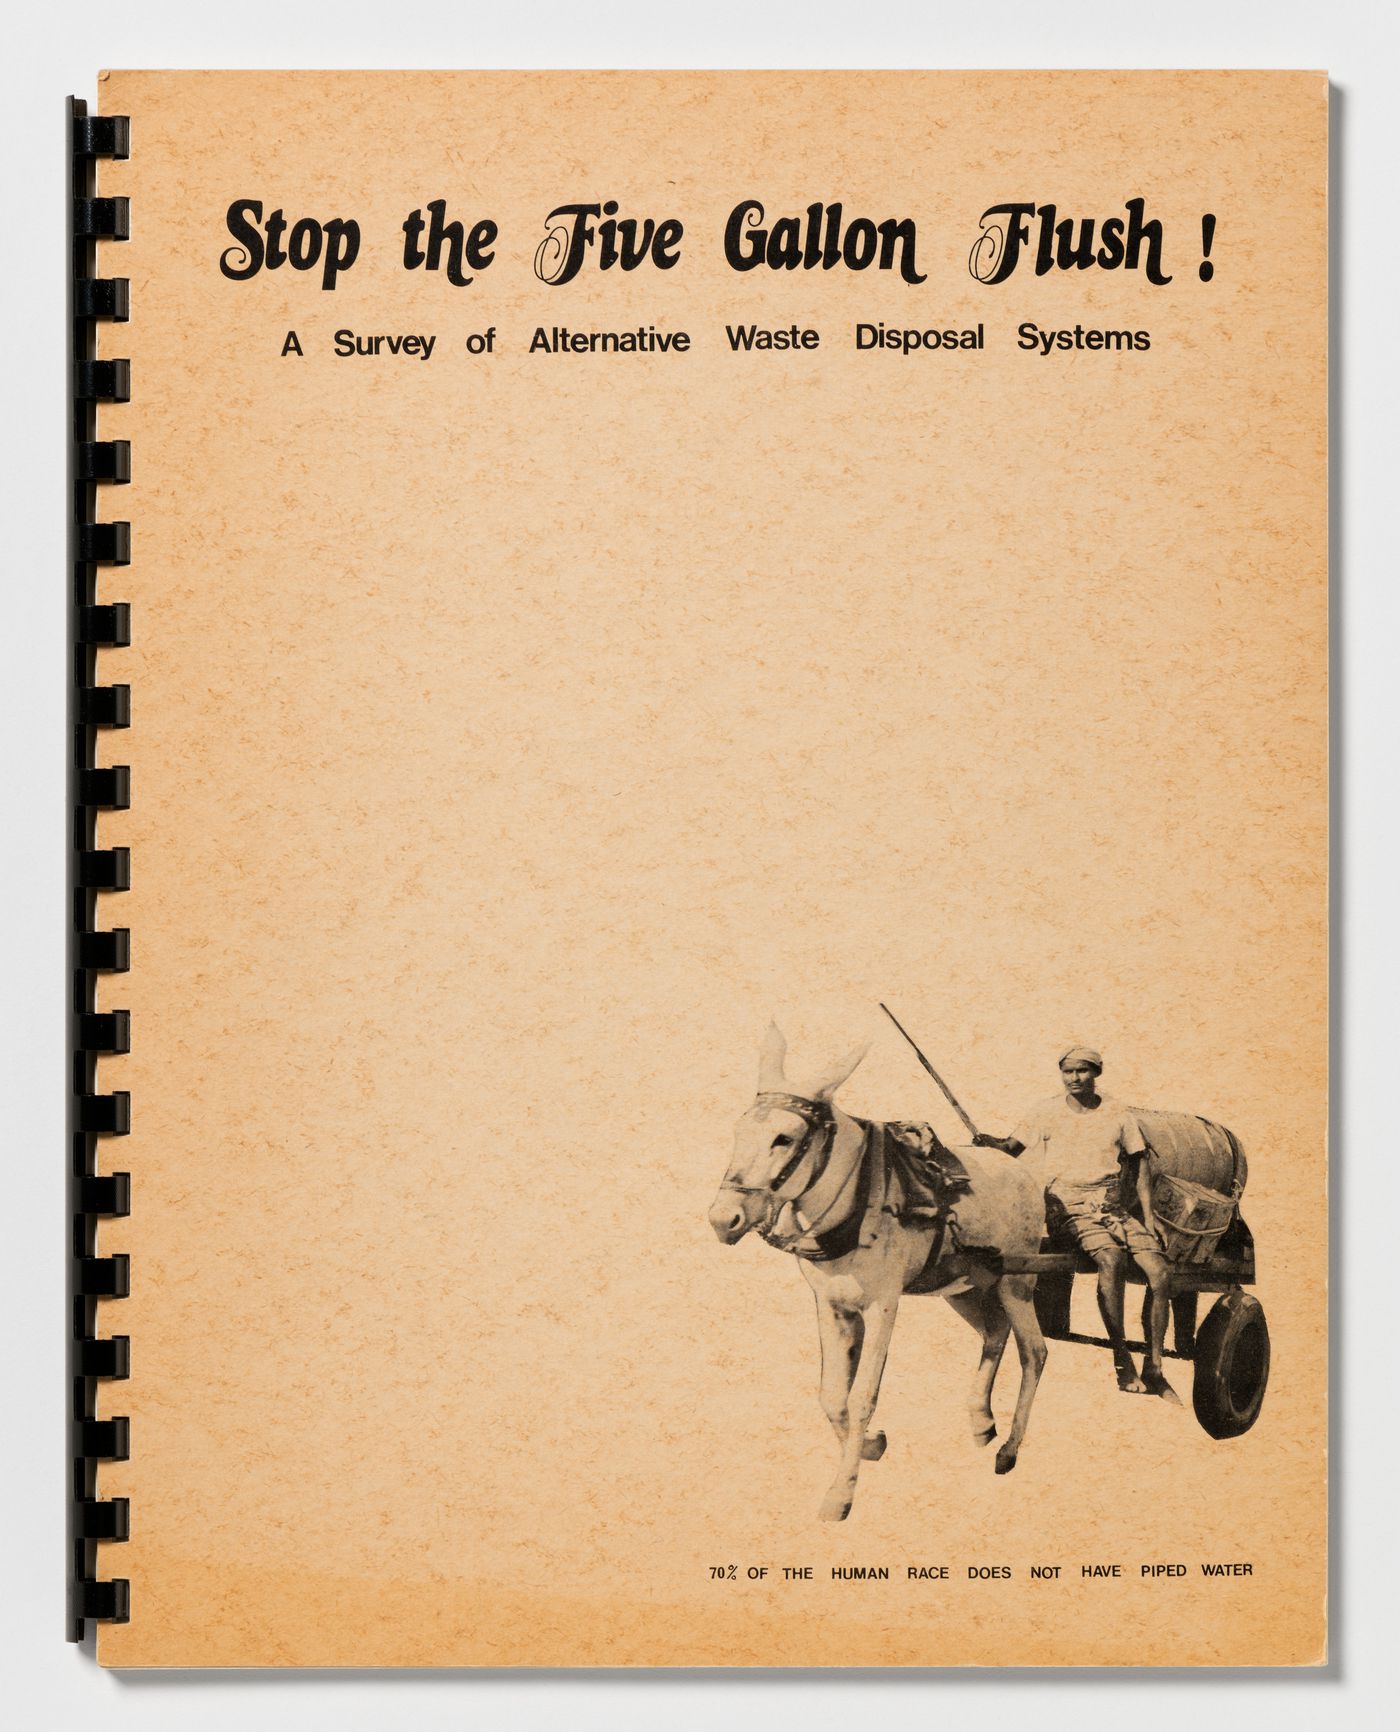 Stop the Five Gallon Flush! A Survey of Alternative Waste Disposal